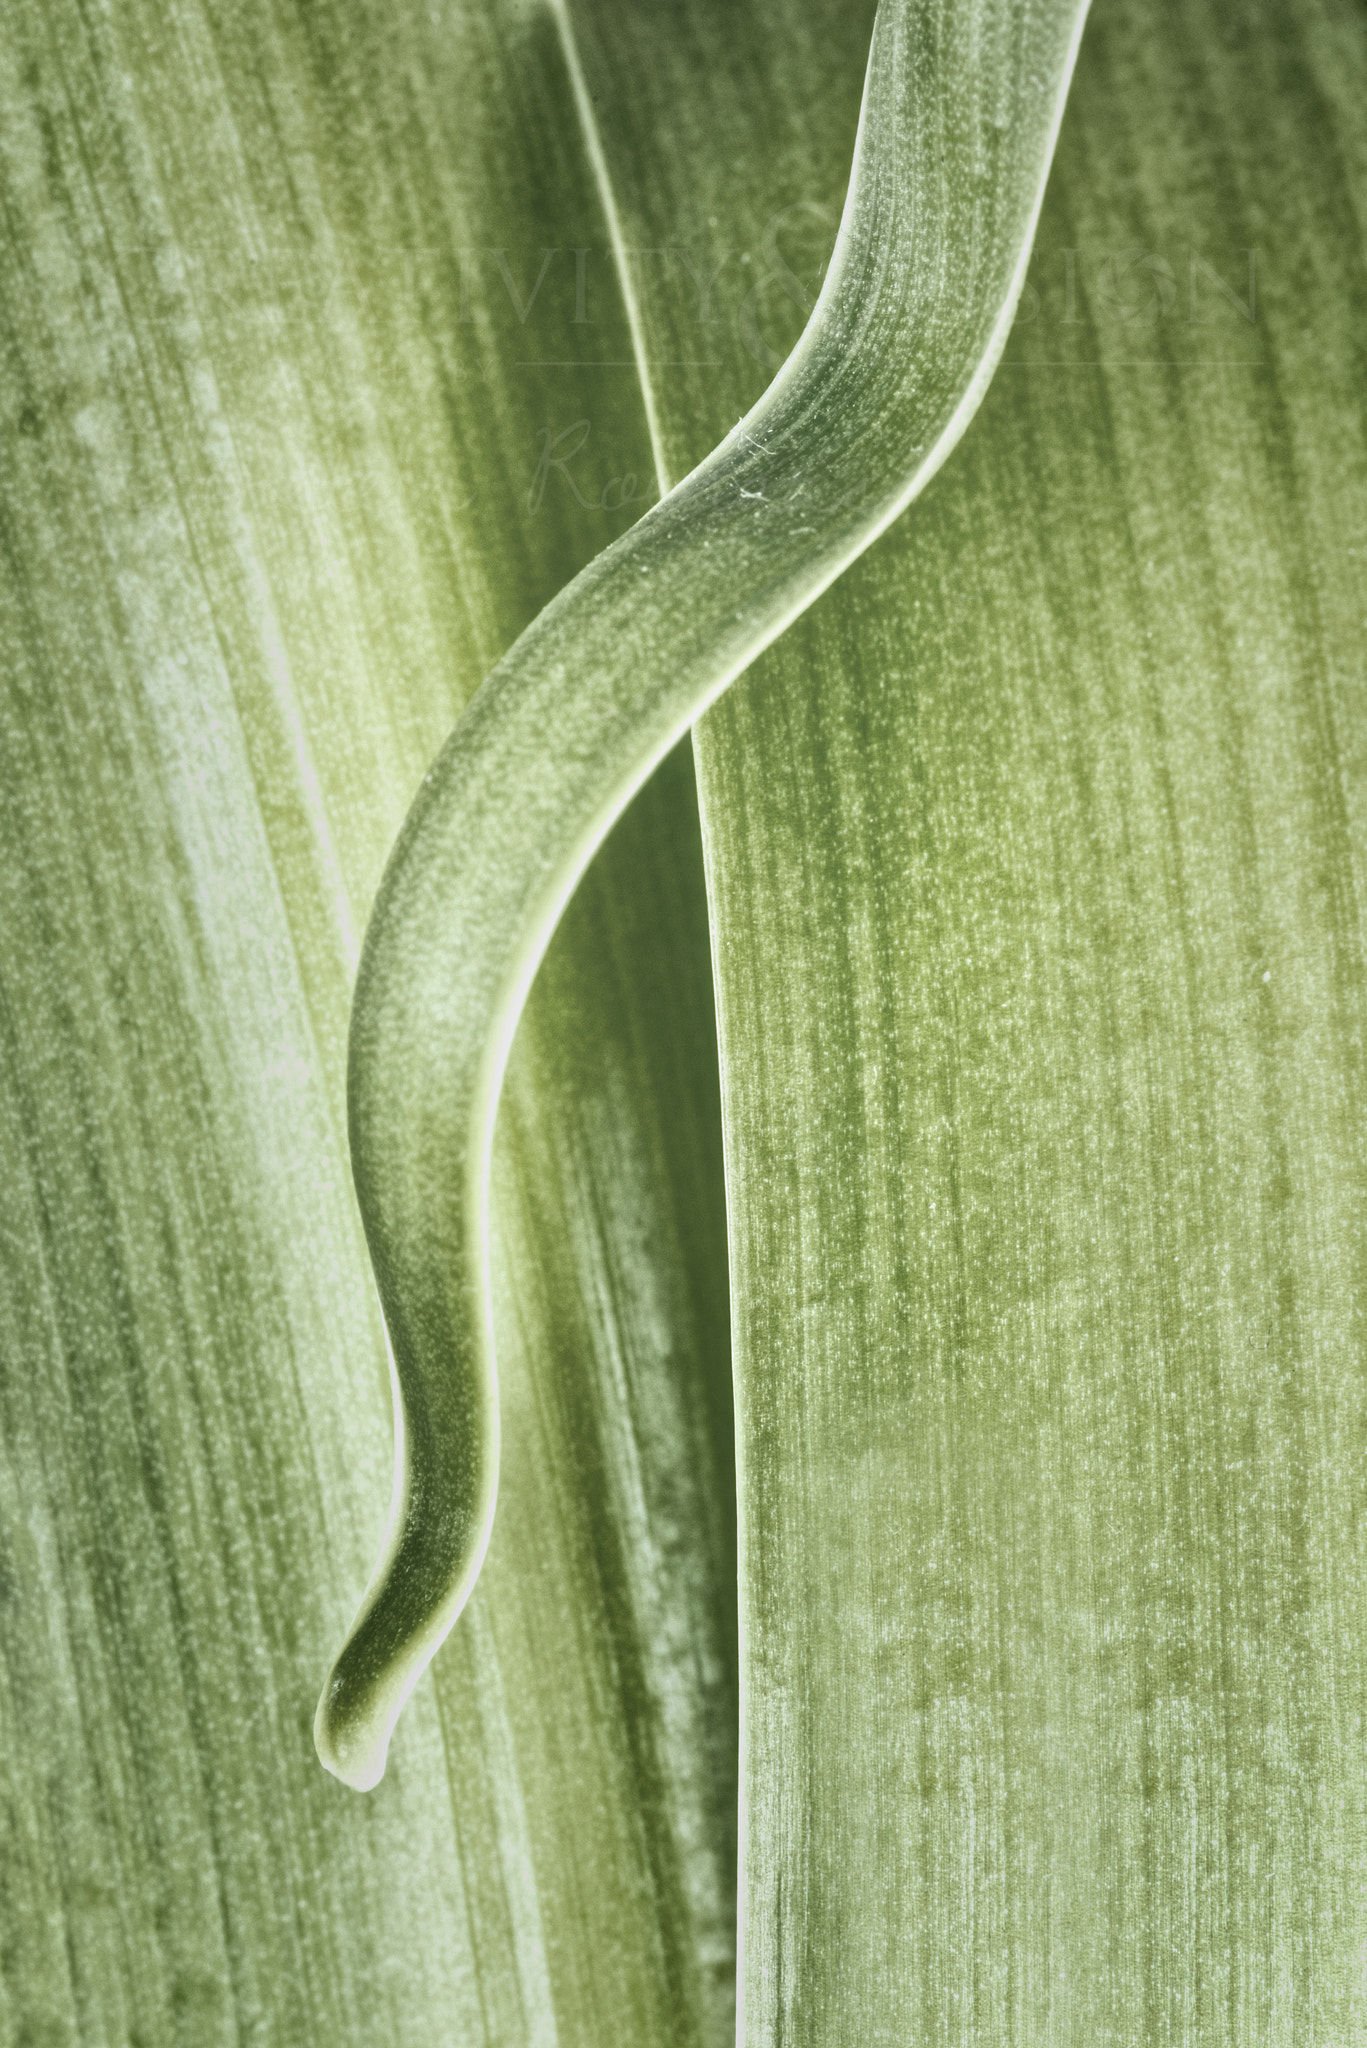 Pentax K-1 sample photo. Plant life photography